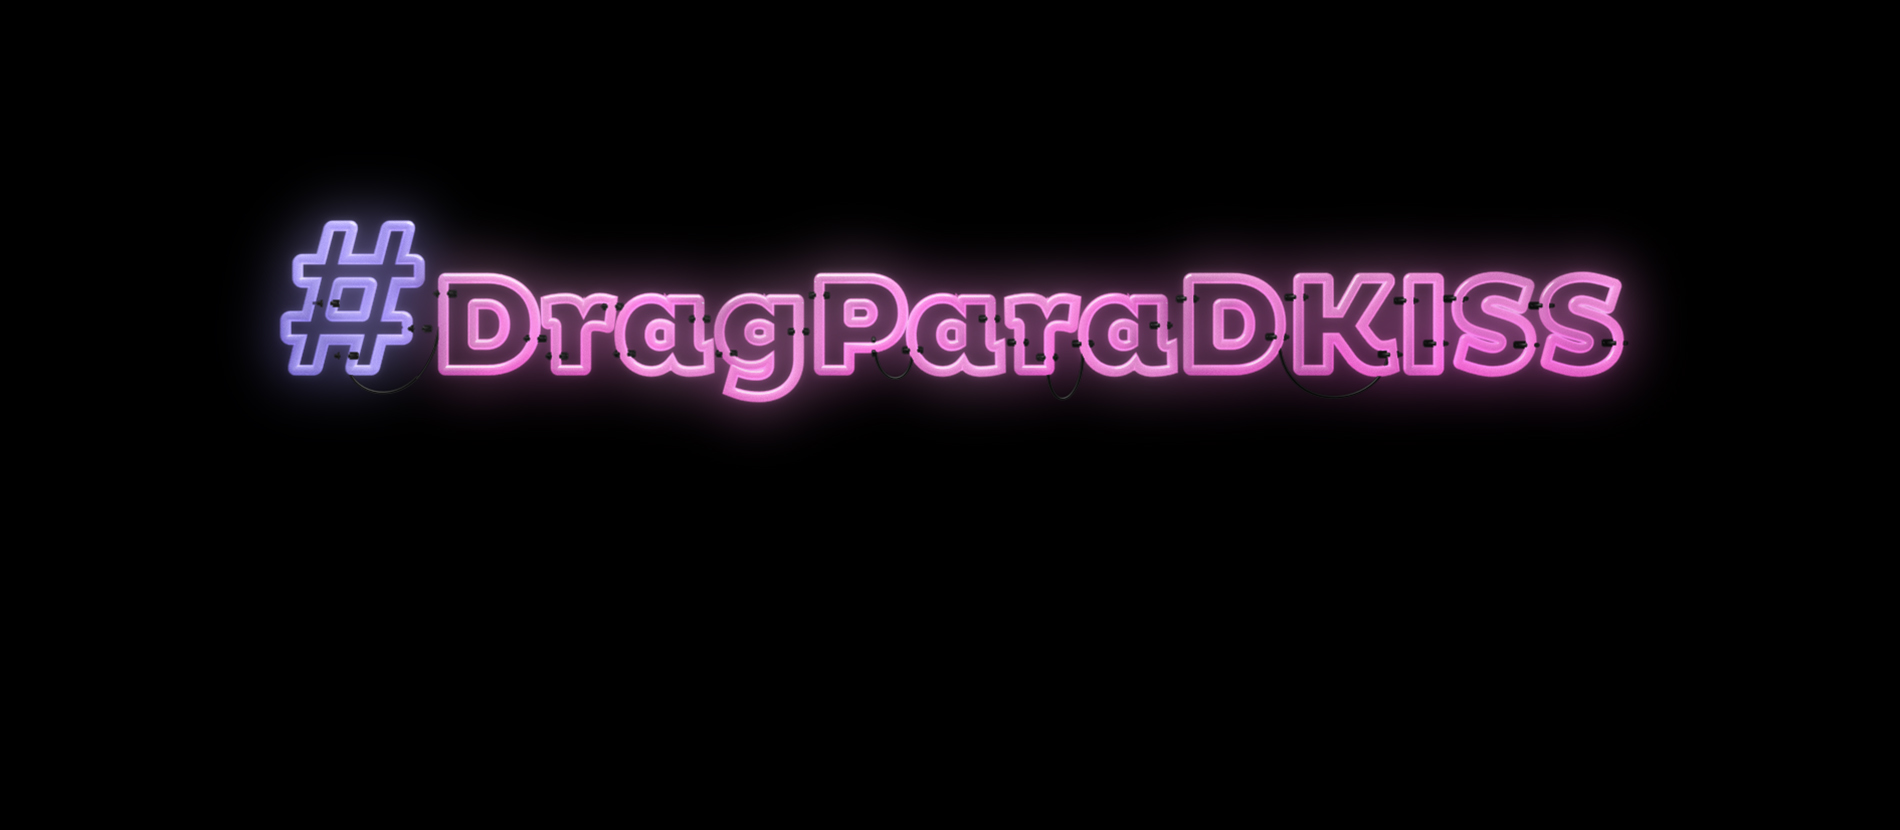 Concurso #DragParaDKISS